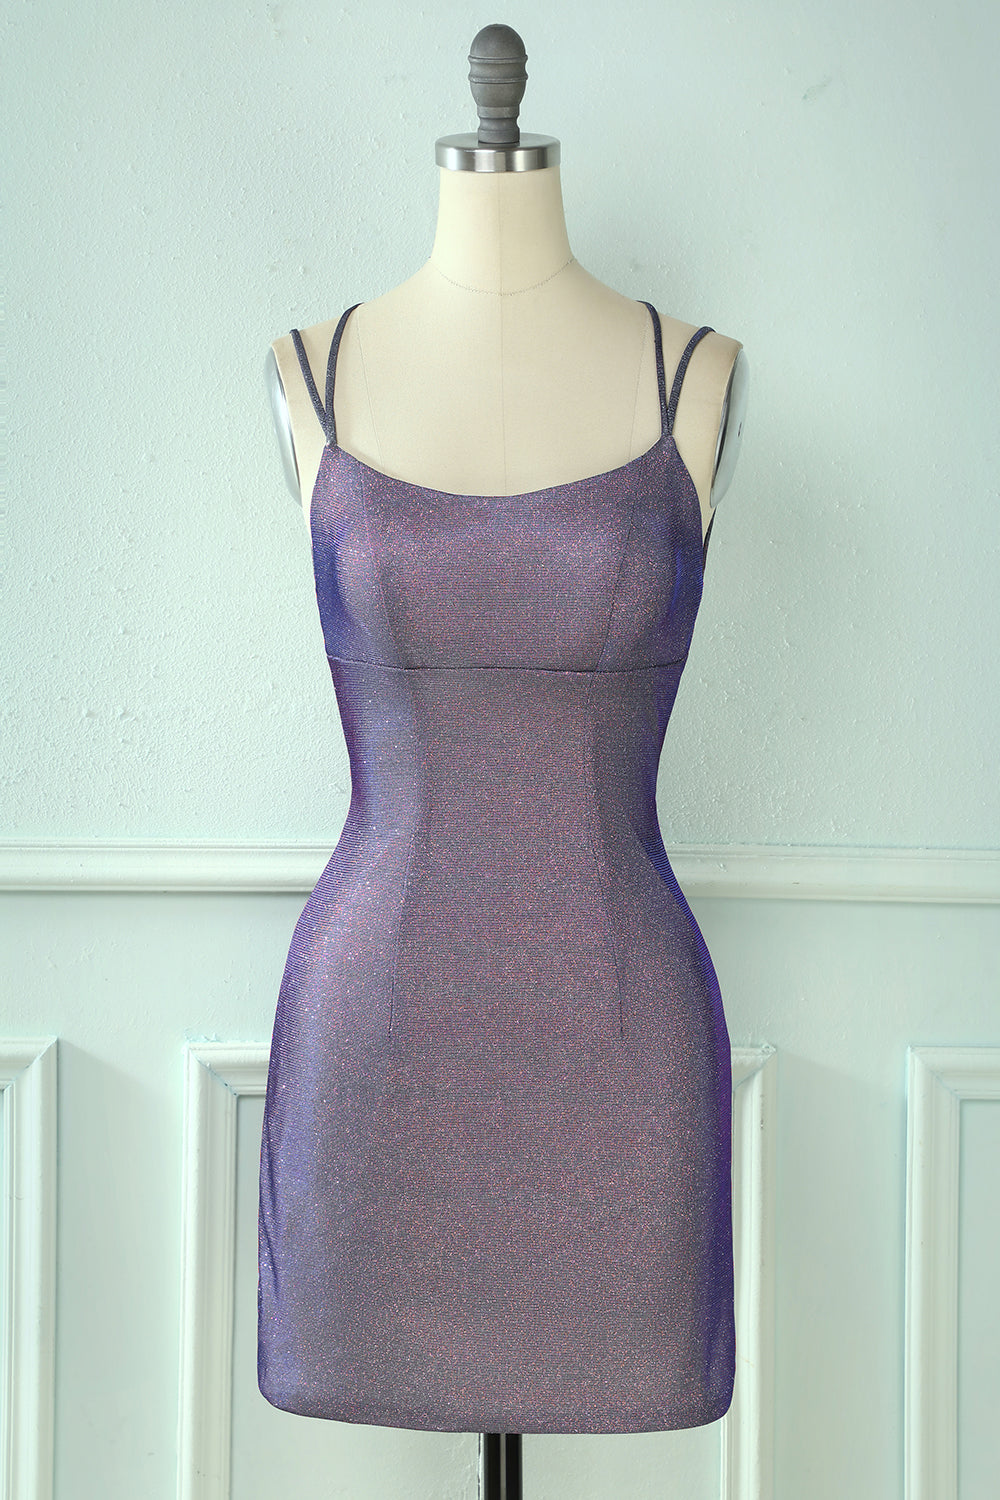 Glitter Tight Purple Homecoming Dress